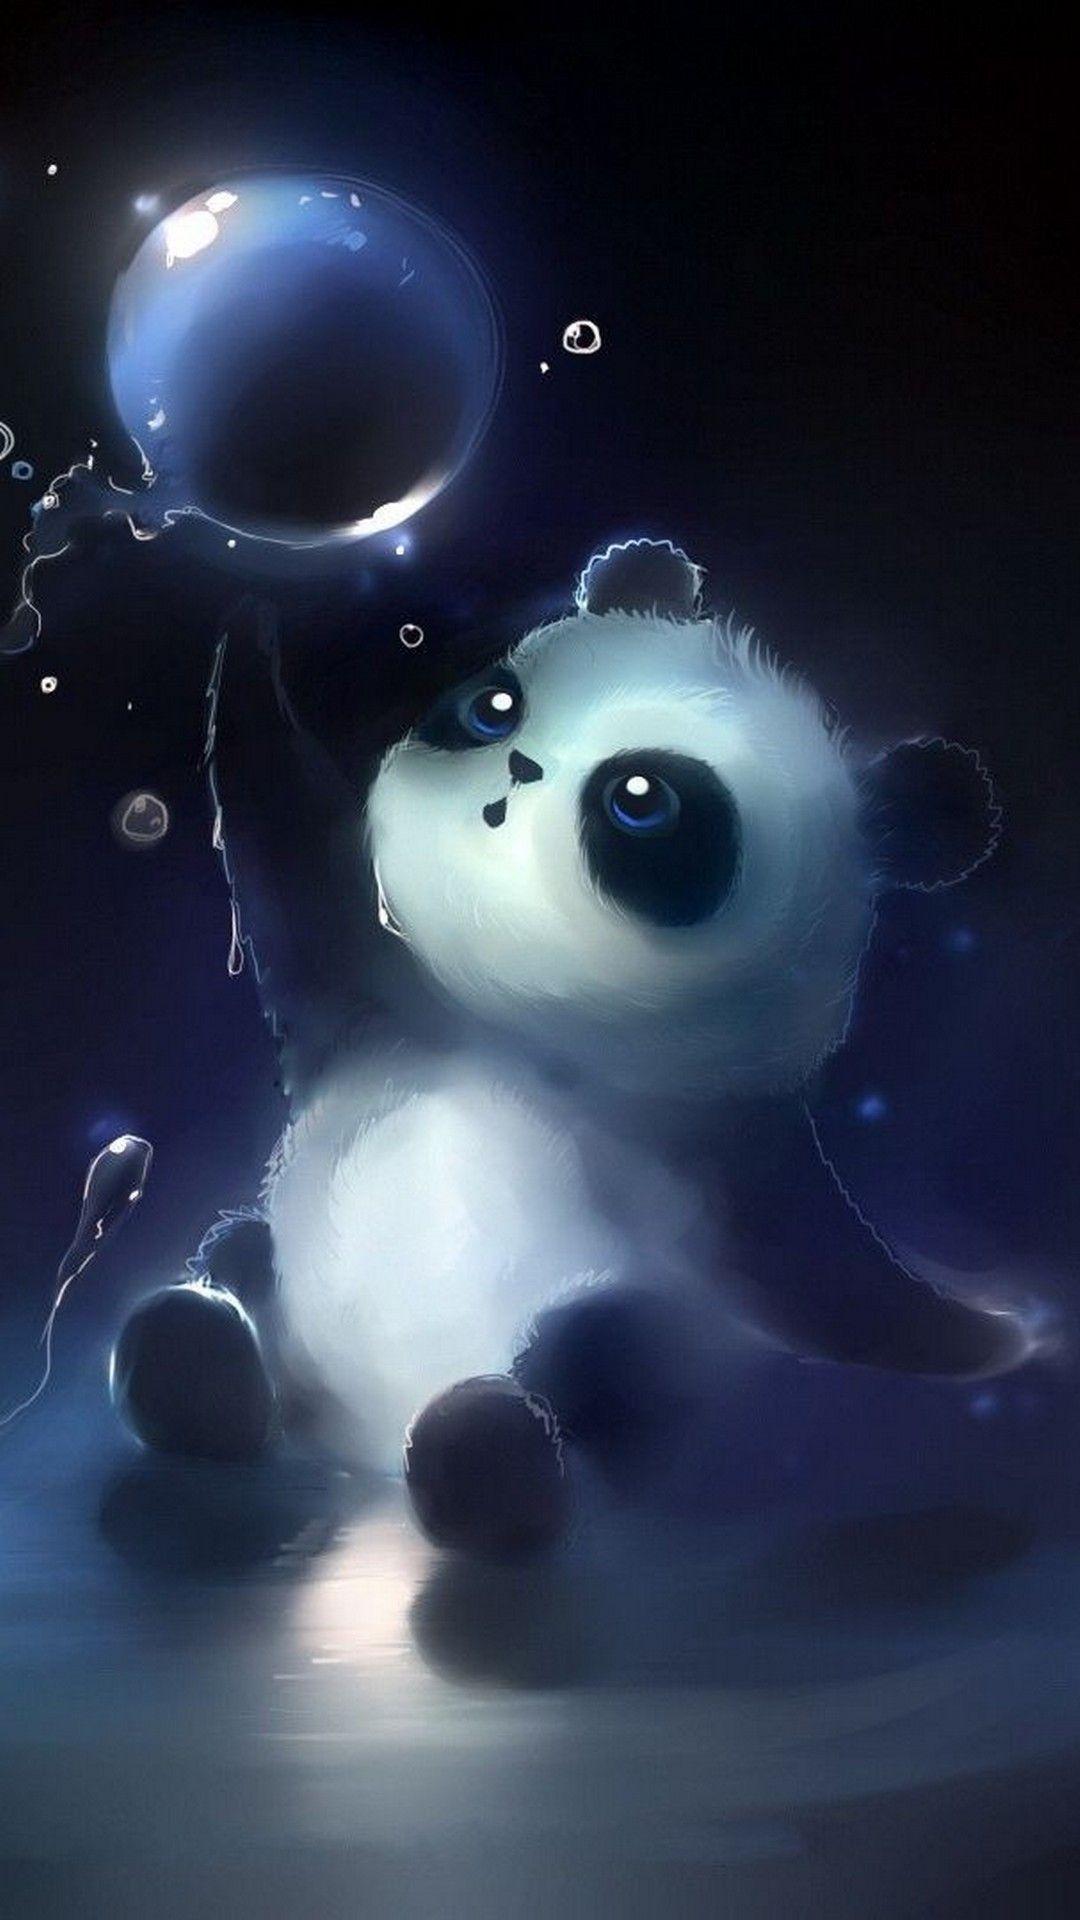 Android Wallpaper HD Baby Panda Android Wallpaper. Cute panda wallpaper, Panda art, Panda wallpaper